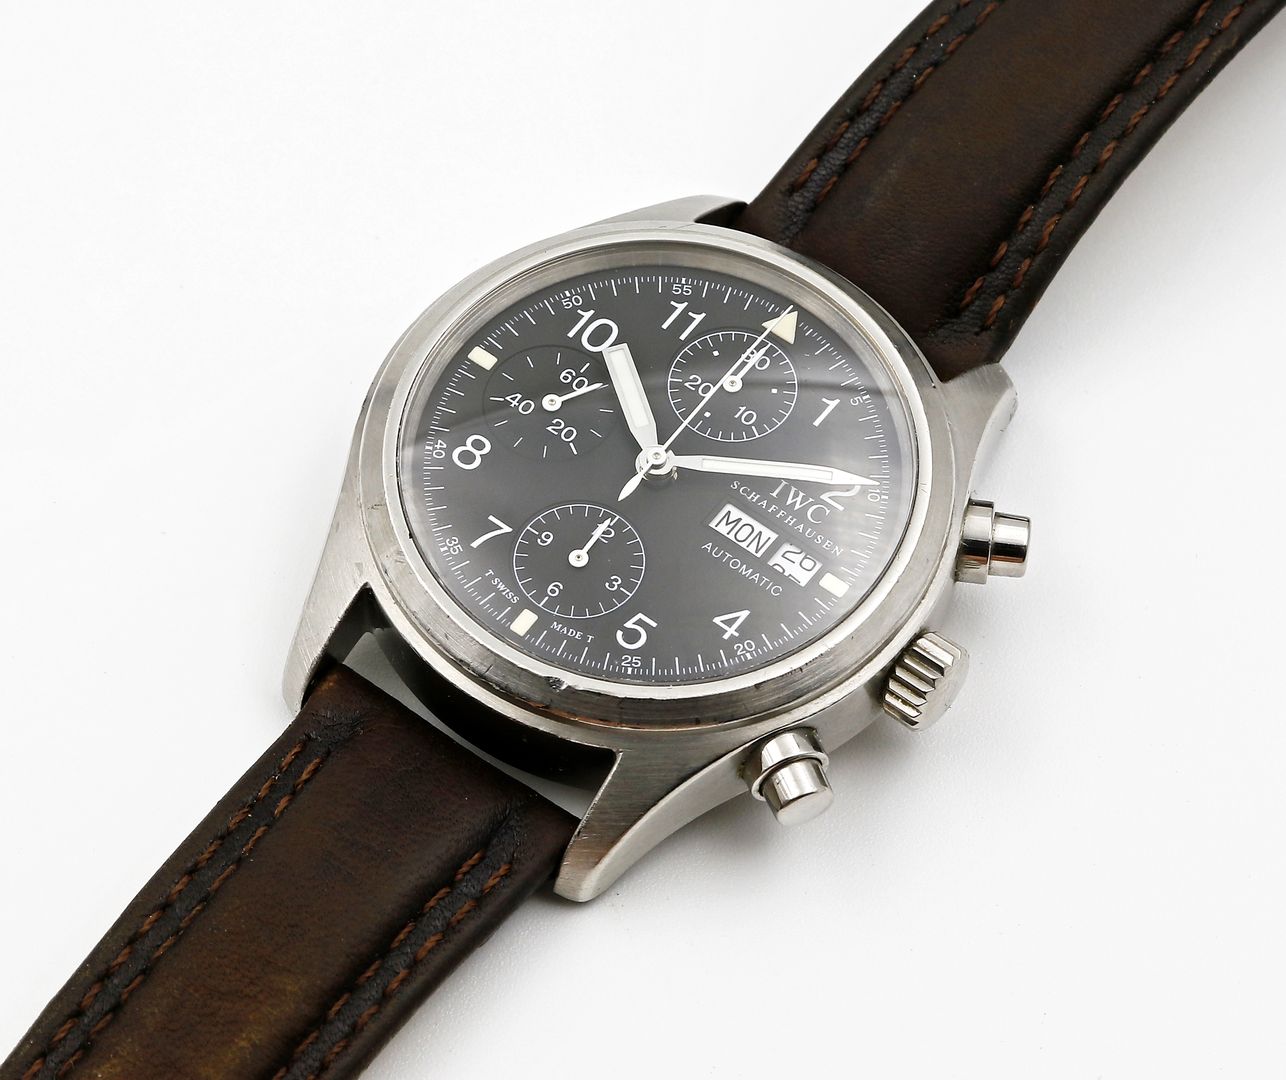 Herren-Armbandchronometer "Der Fliegerchronograph", IWC.